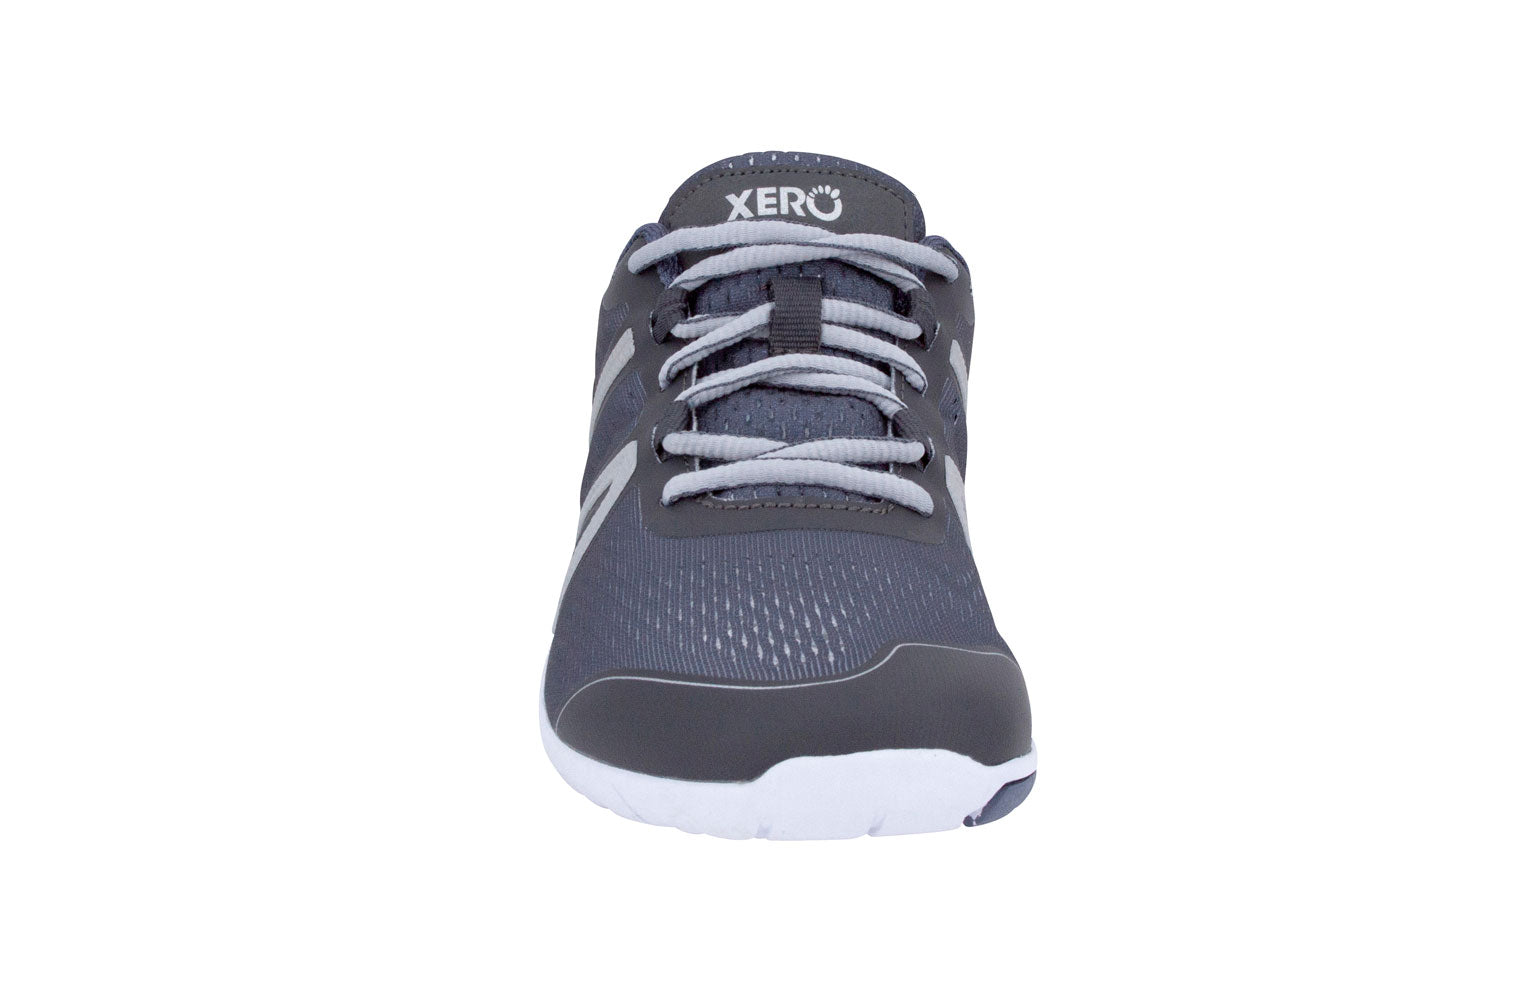 Xero Shoes HFS Womens barfods træningssko/løbesko til kvinder i farven steel gray, forfra